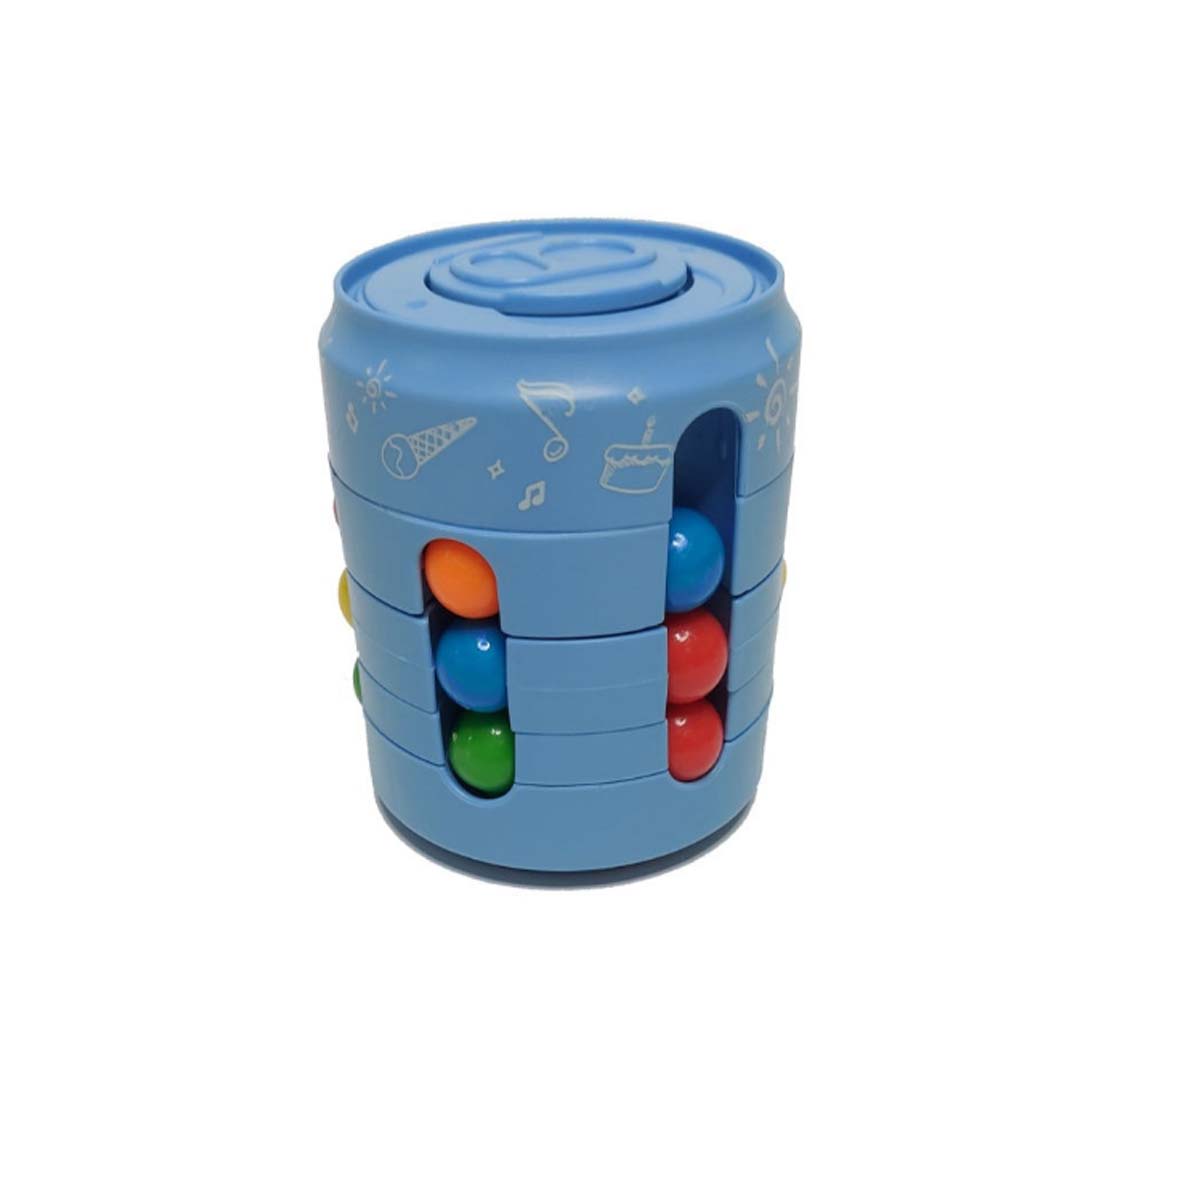 Головоломка банка спиннер Cans spinner Cube, цвет светло синий